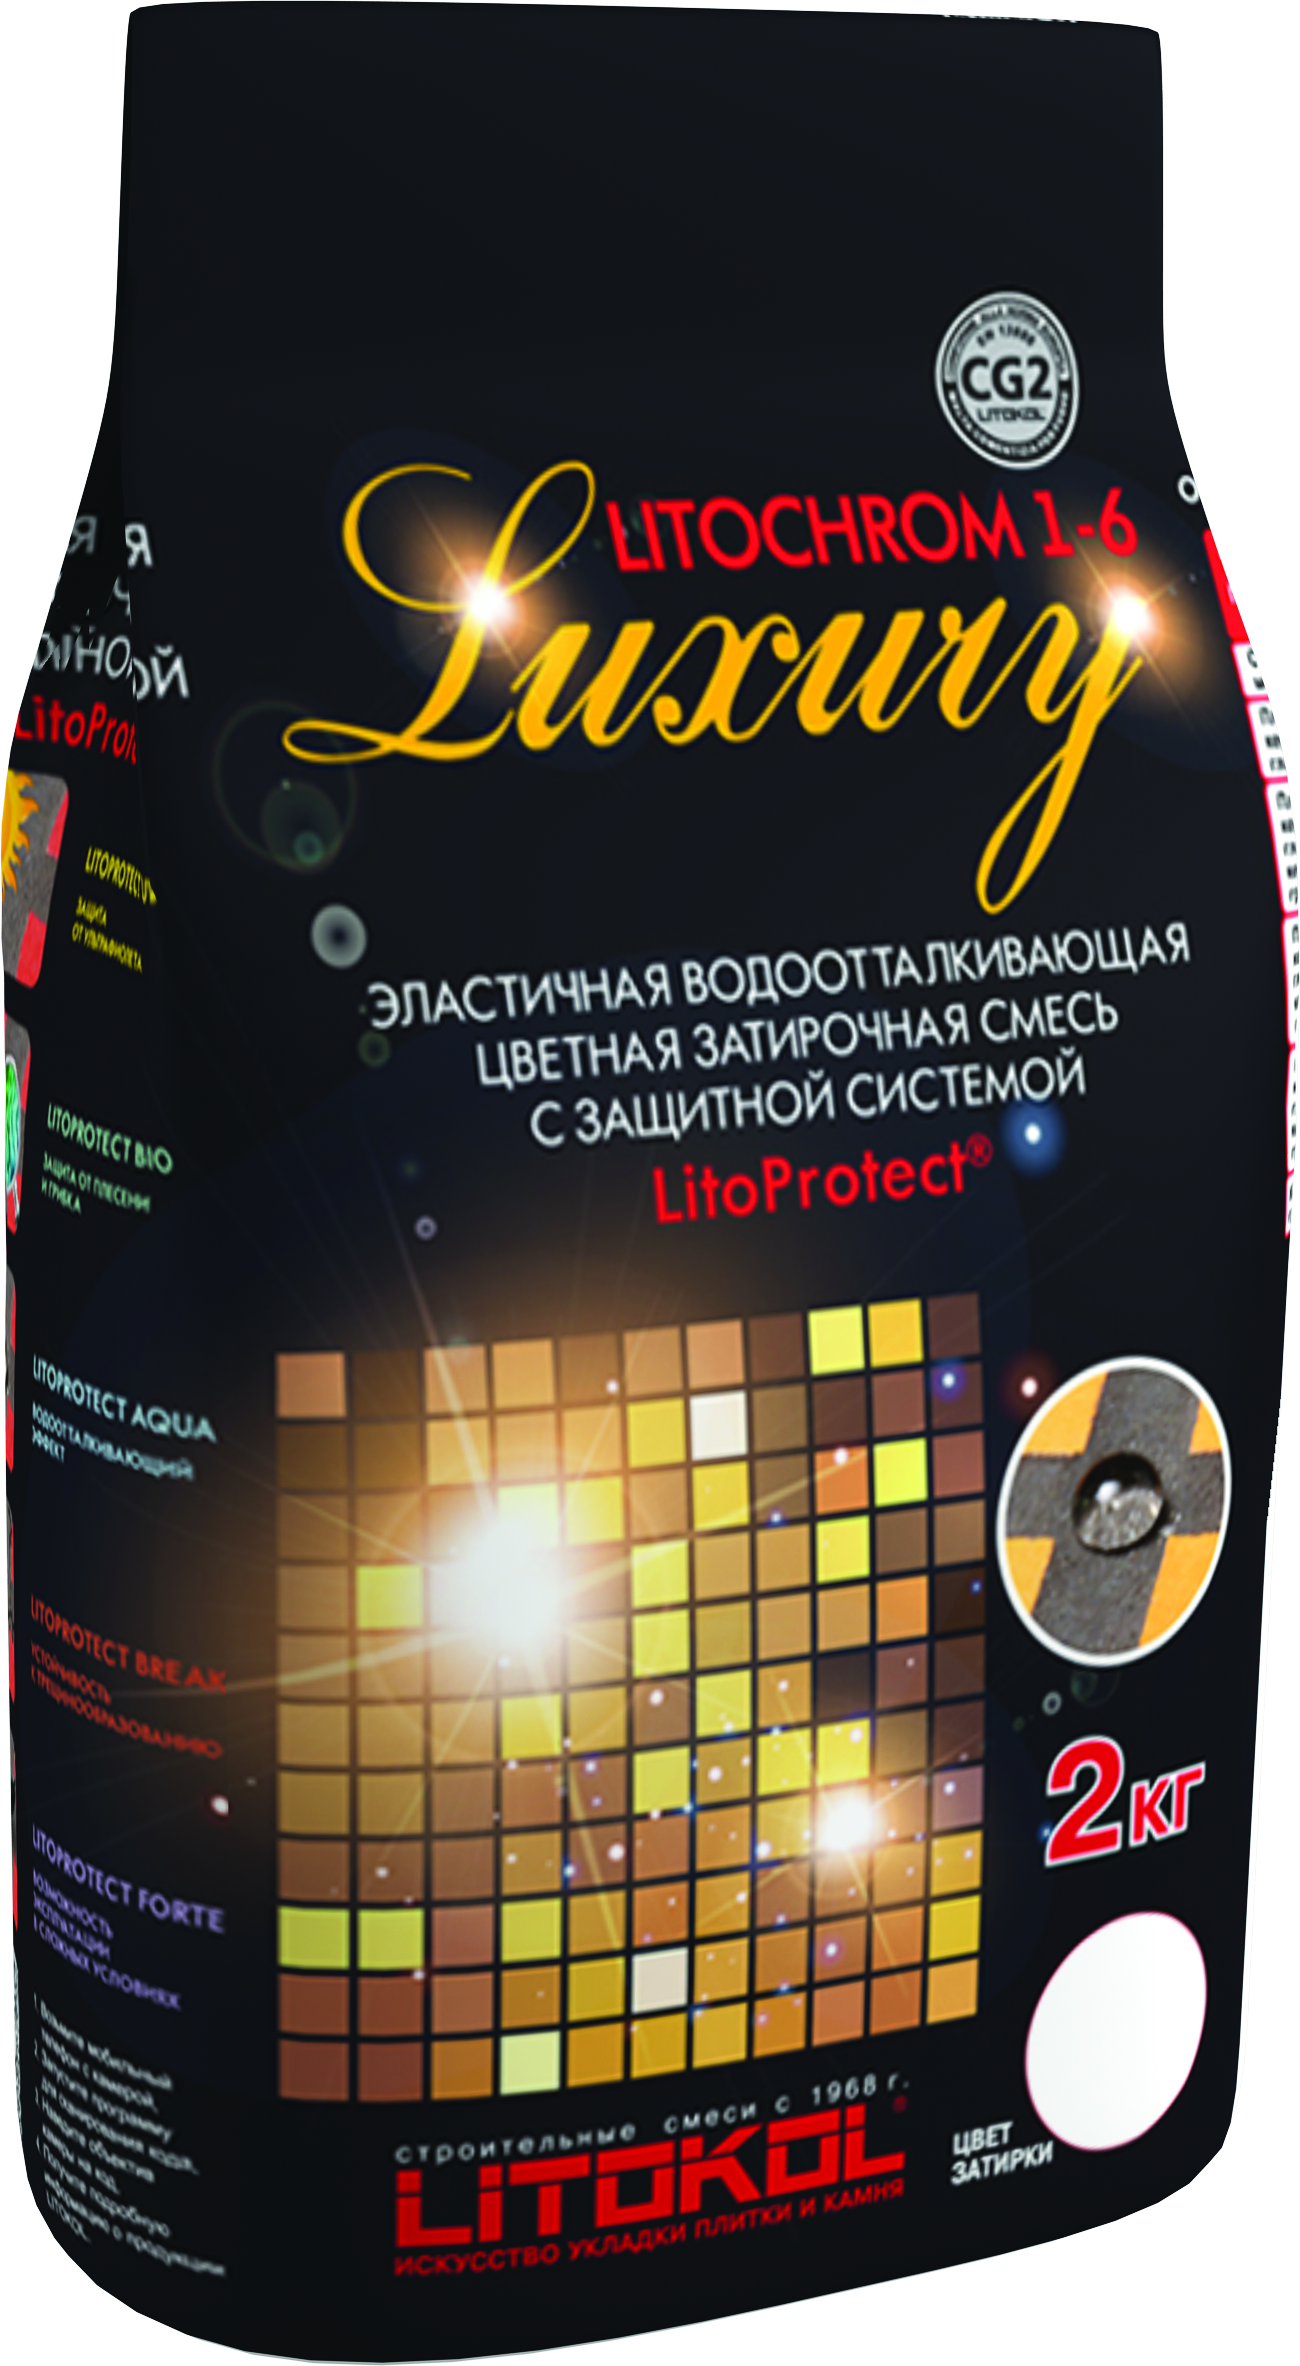 Купить Litokol Litochrom 1-6 Luxury C.00, 2 кг